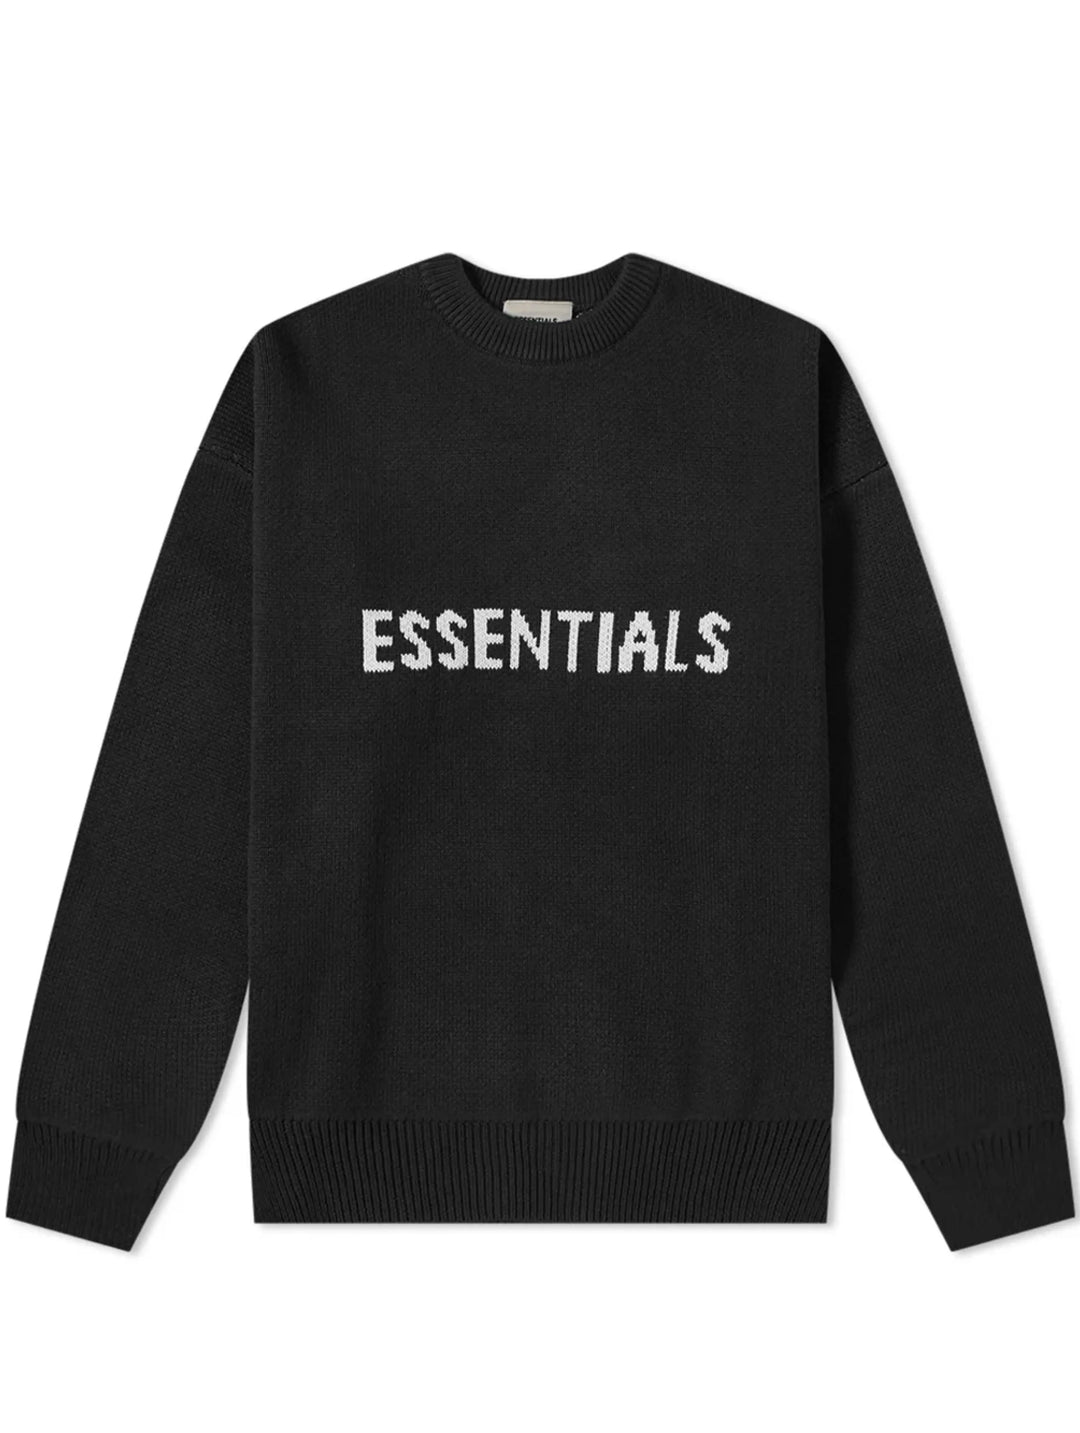 Fear of God Essentials Knit Sweater Dark Slate/Stretch Limo/Black [SS20] Prior